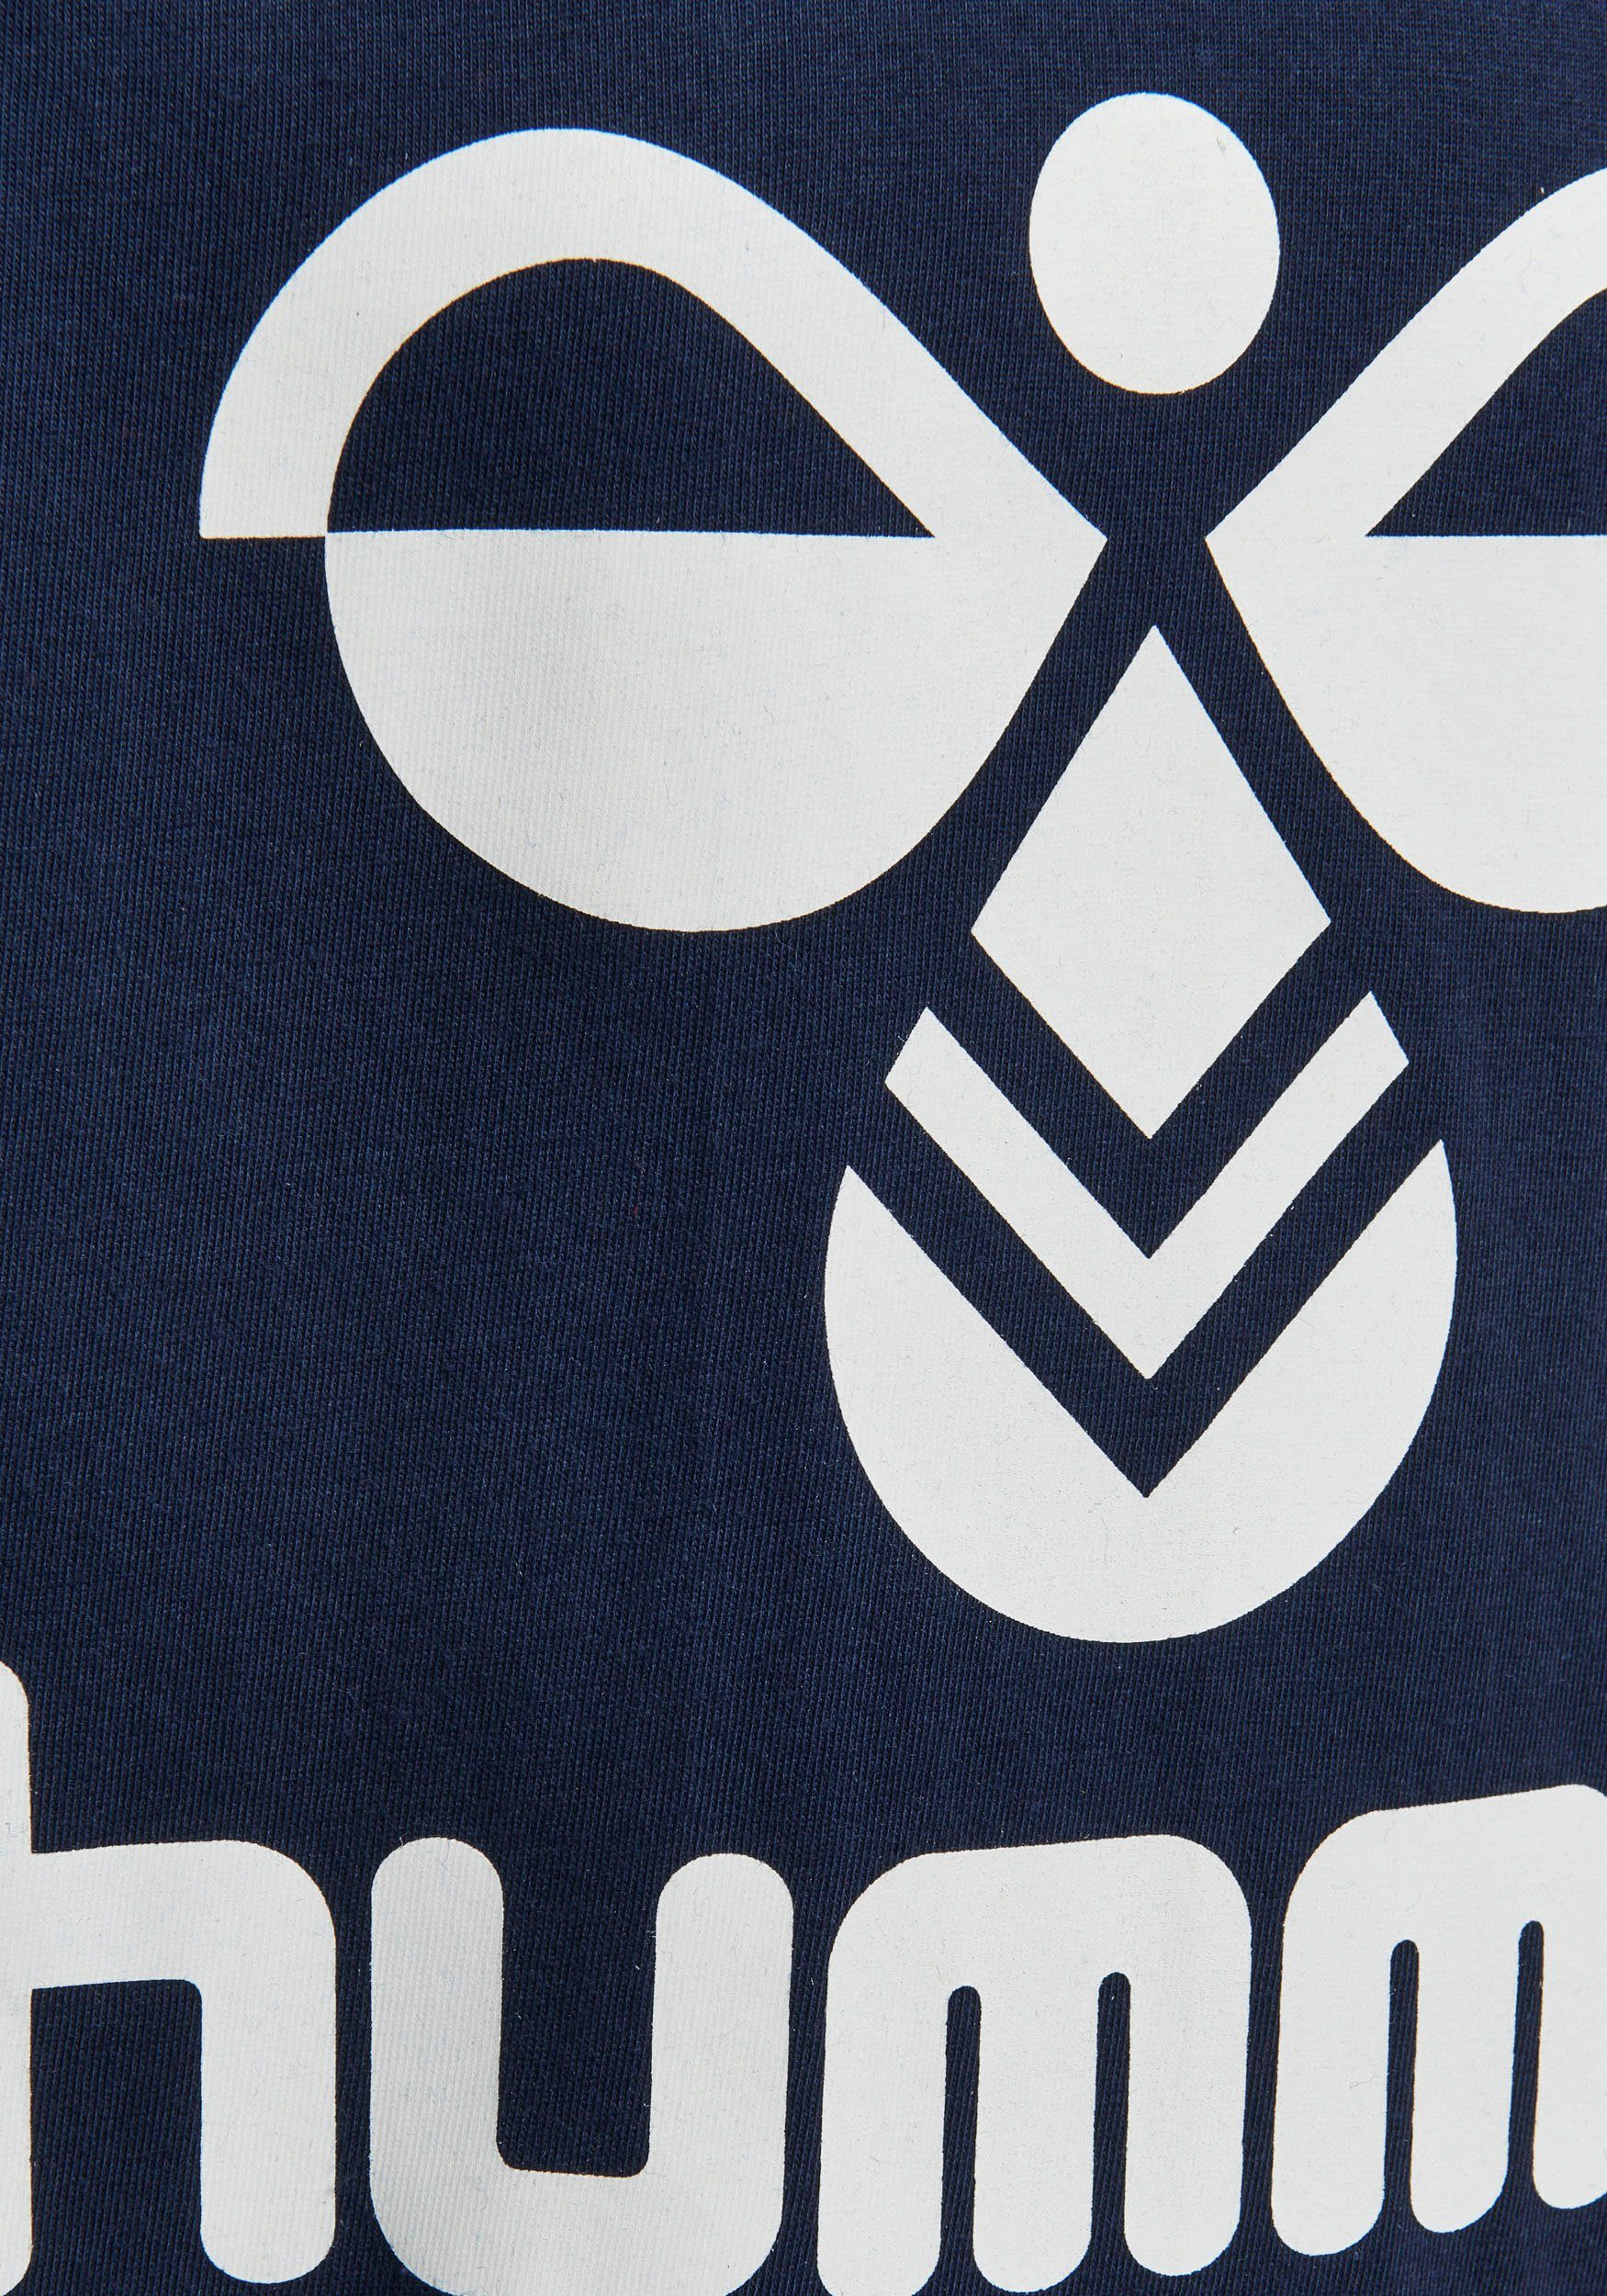 Sleeve T-SHIRT für - hummel Short (1-tlg) HMLTRES Kinder marine T-Shirt